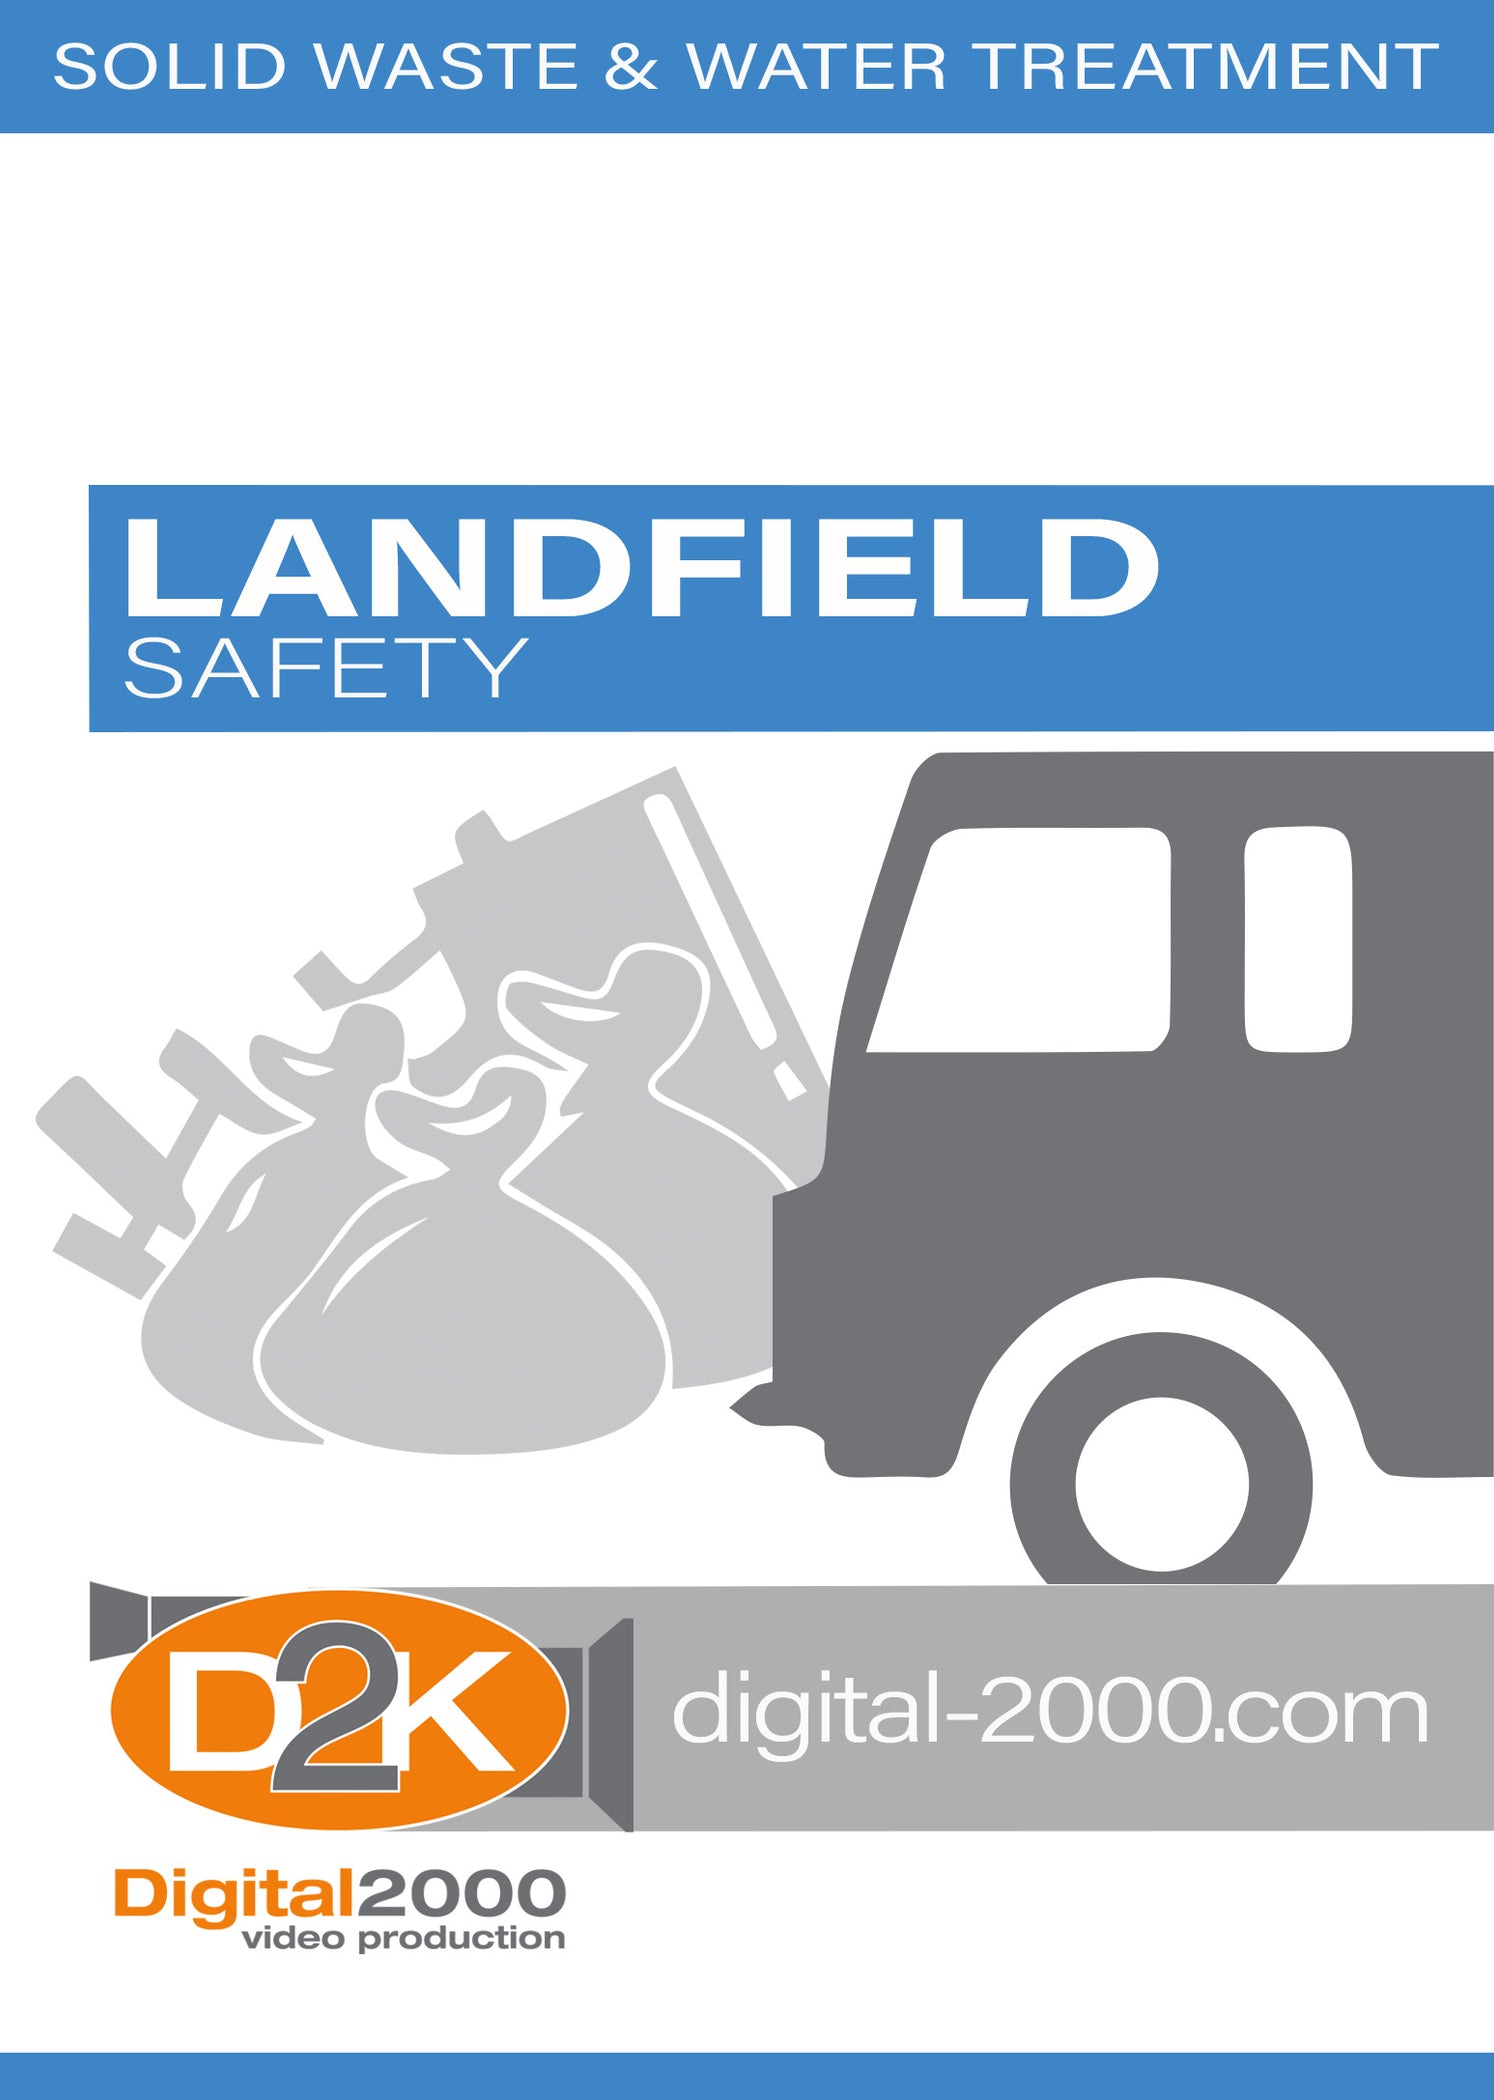 Landfill Safety — Digital2000 Safety Training